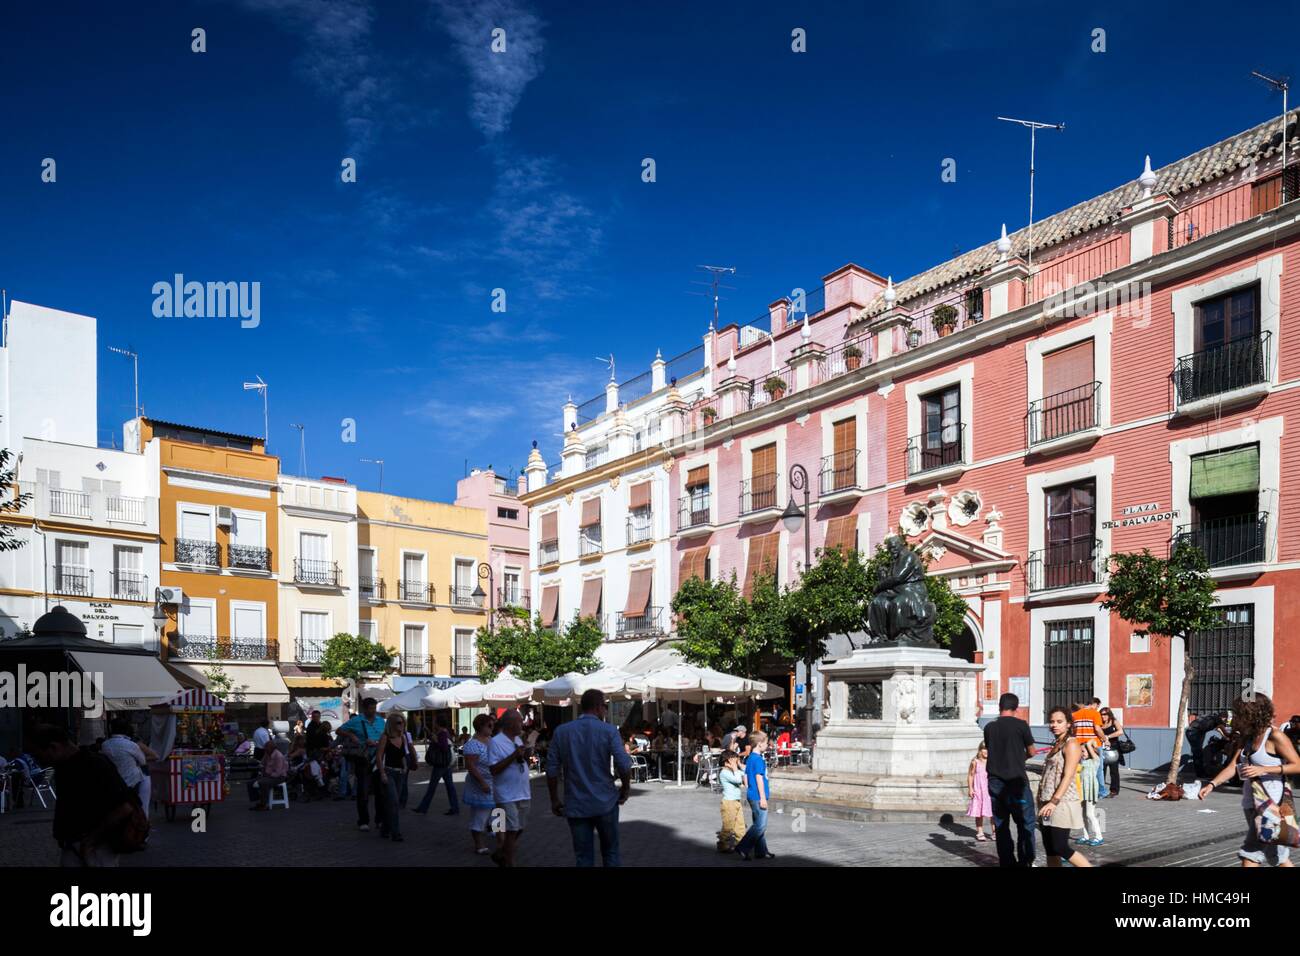 El Salvador square, Seville, Spain Stock Photo - Alamy